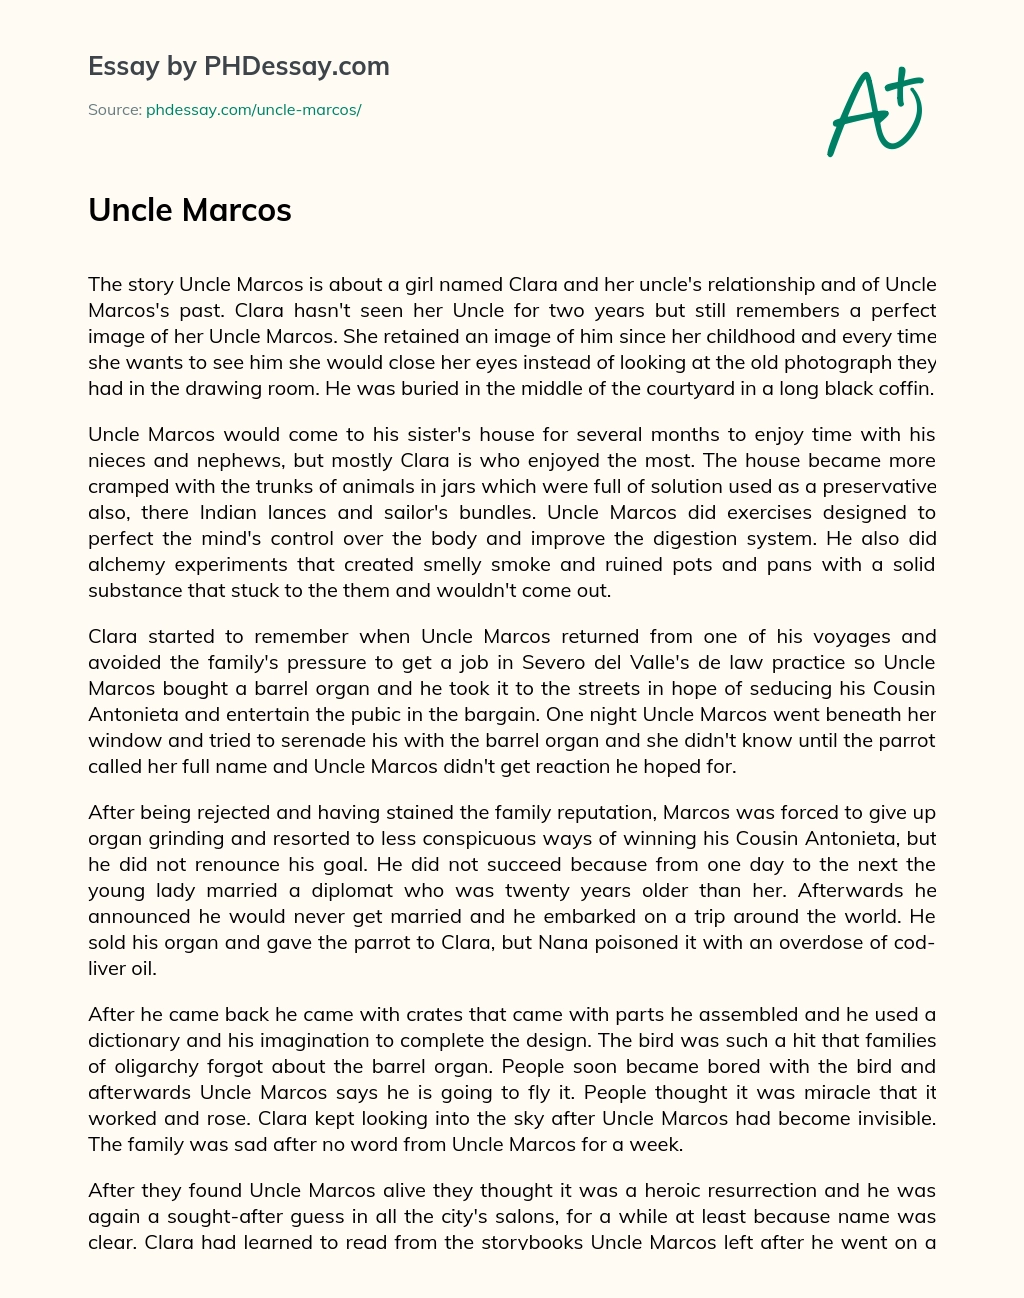 Uncle Marcos essay